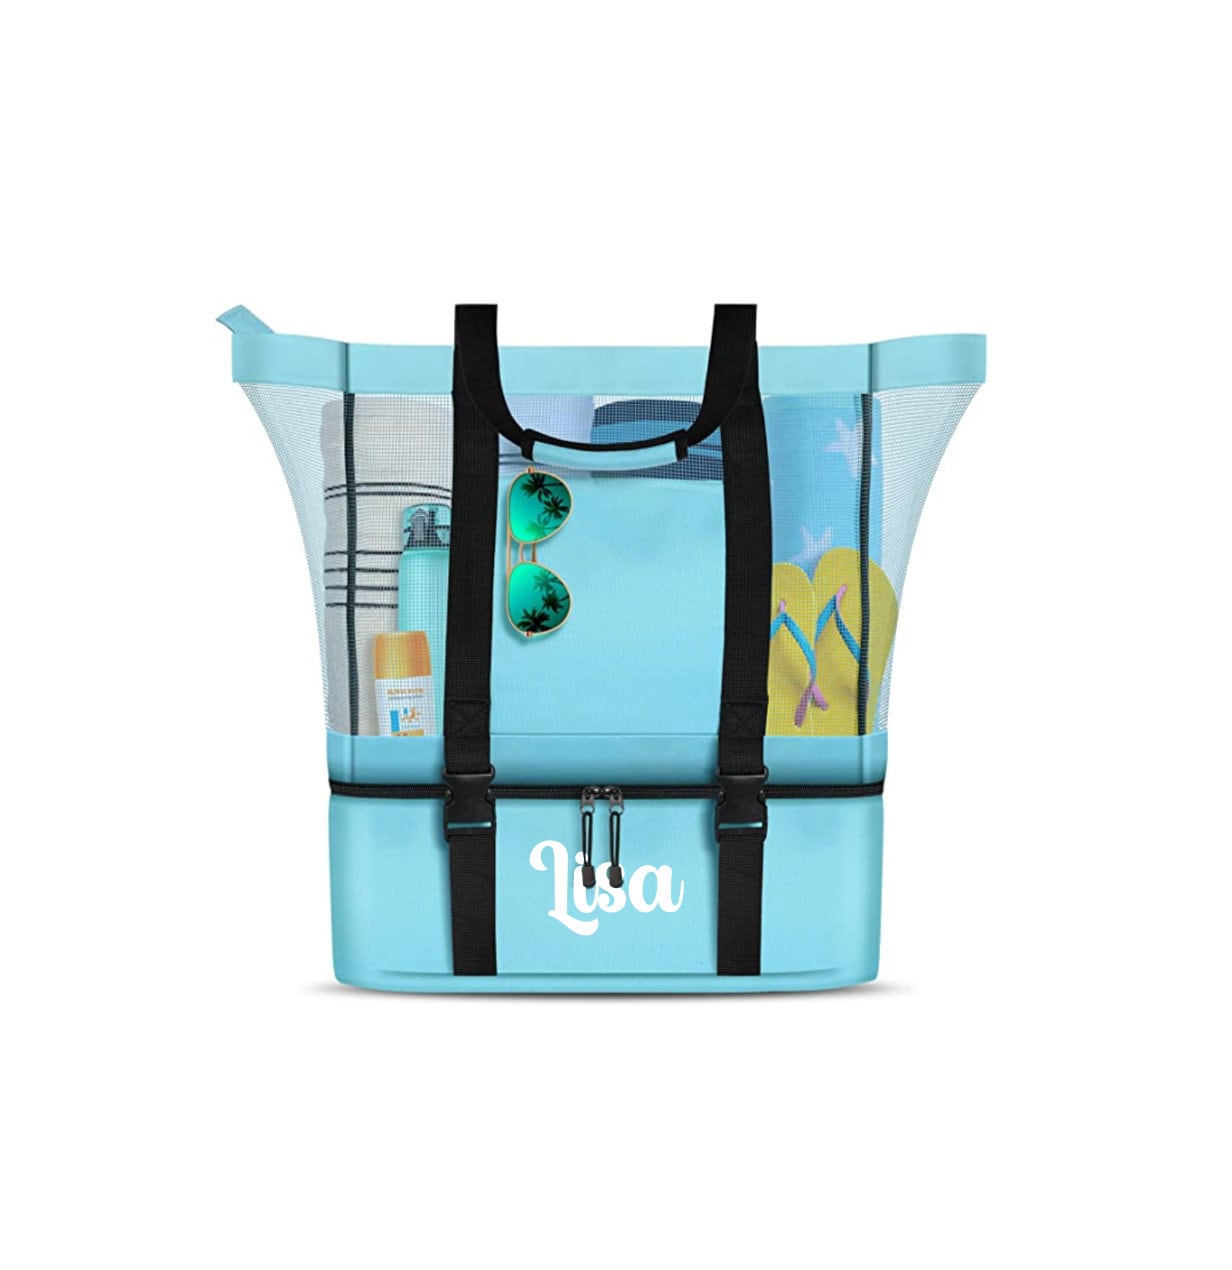 Picnic Portable Mesh Beach Bag with Detachable Cooler Camping Blue Large Waterproof Tote Bags Capacity Handle Beach Handbag for Pool 